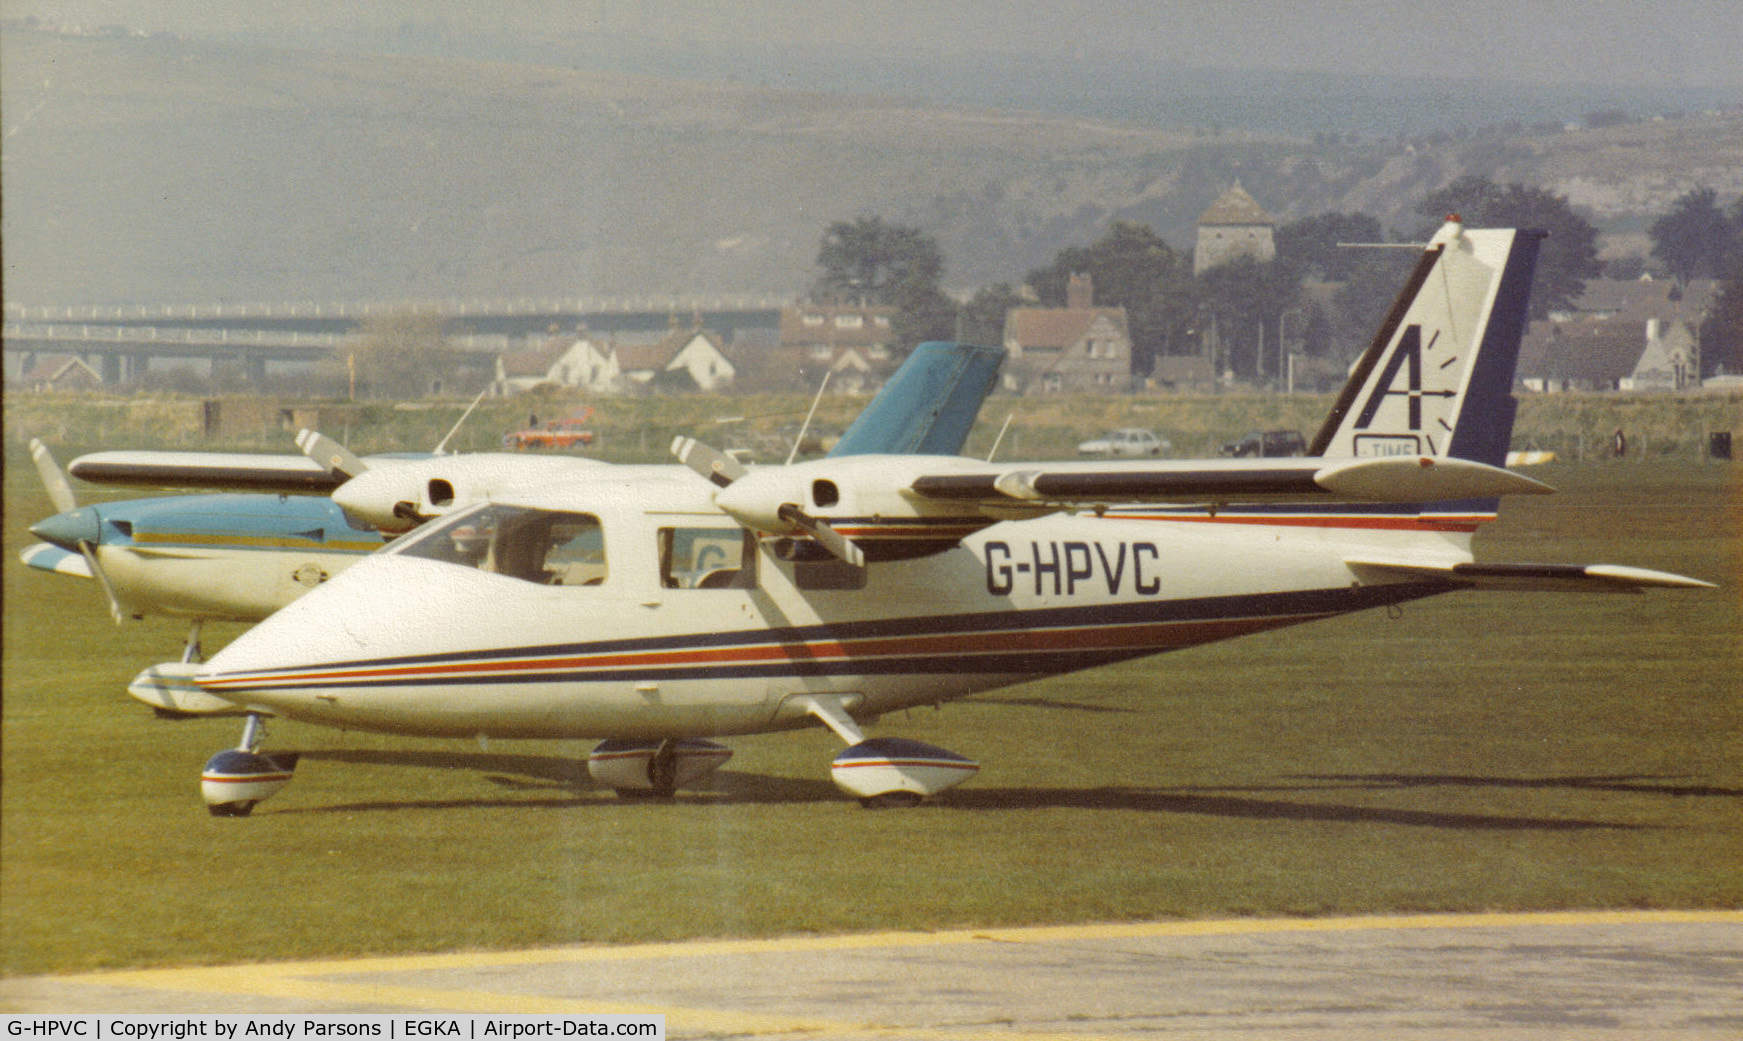 G-HPVC, 1973 Partenavia P-68 C/N 13, Taken a good few years ago vising Shoreham